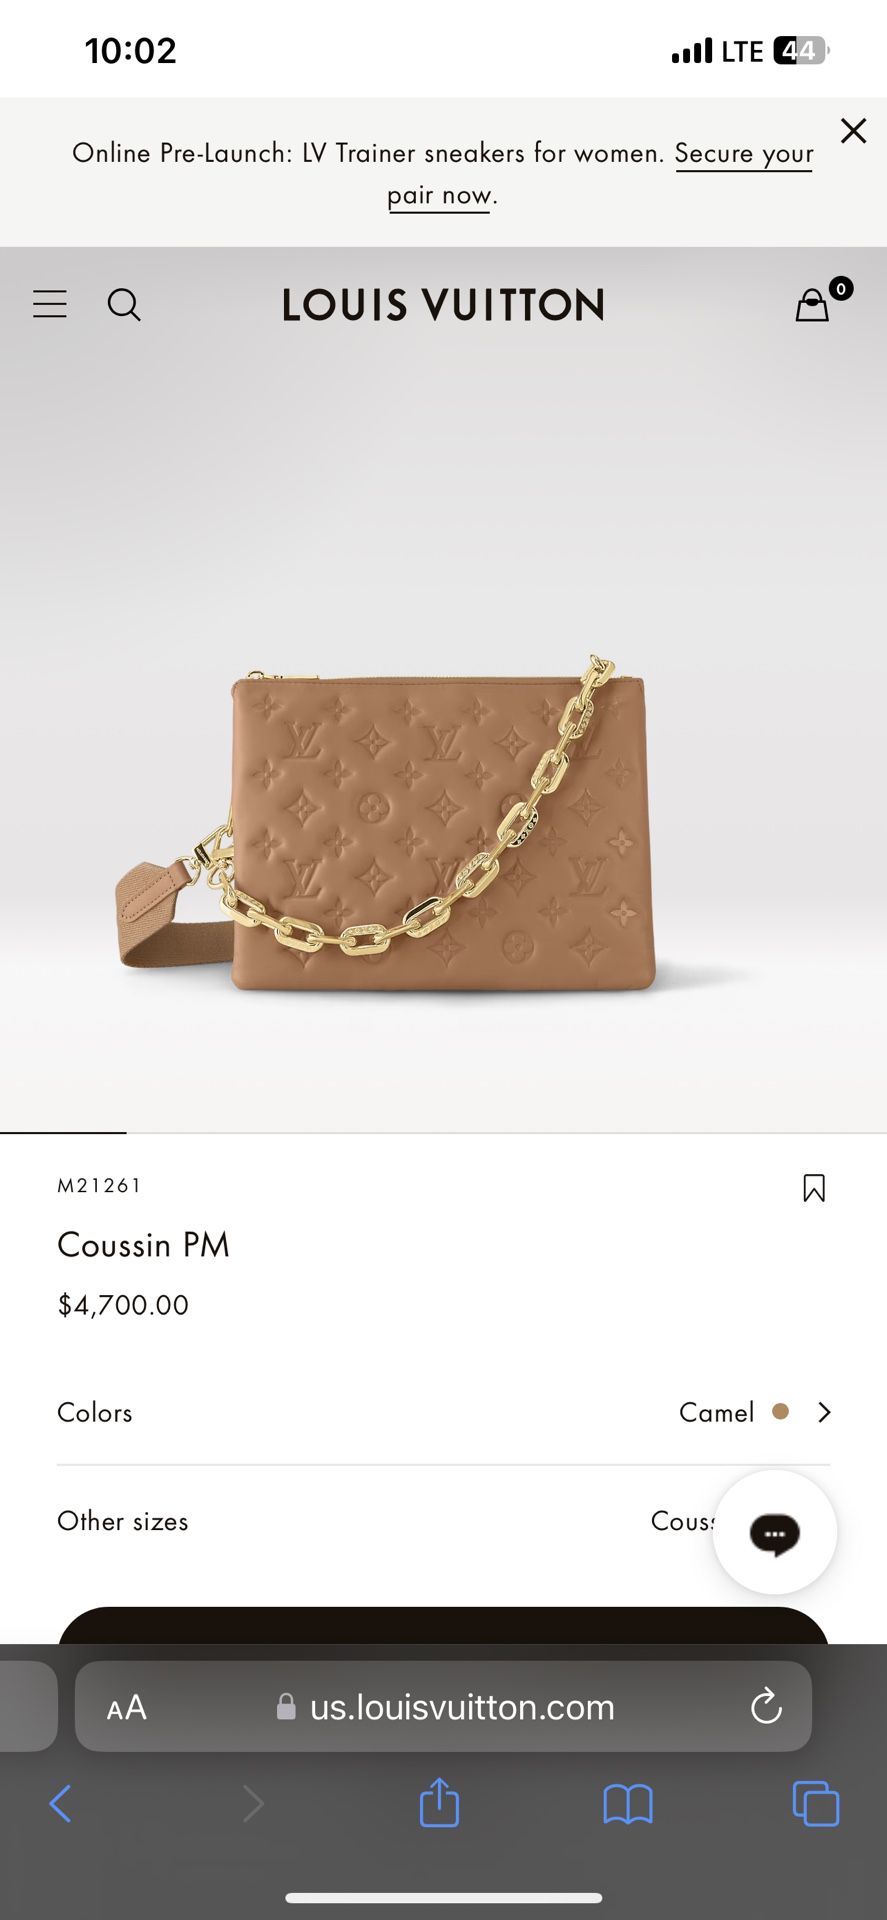 Louis Vuitton Handbags for sale in Denver, Colorado